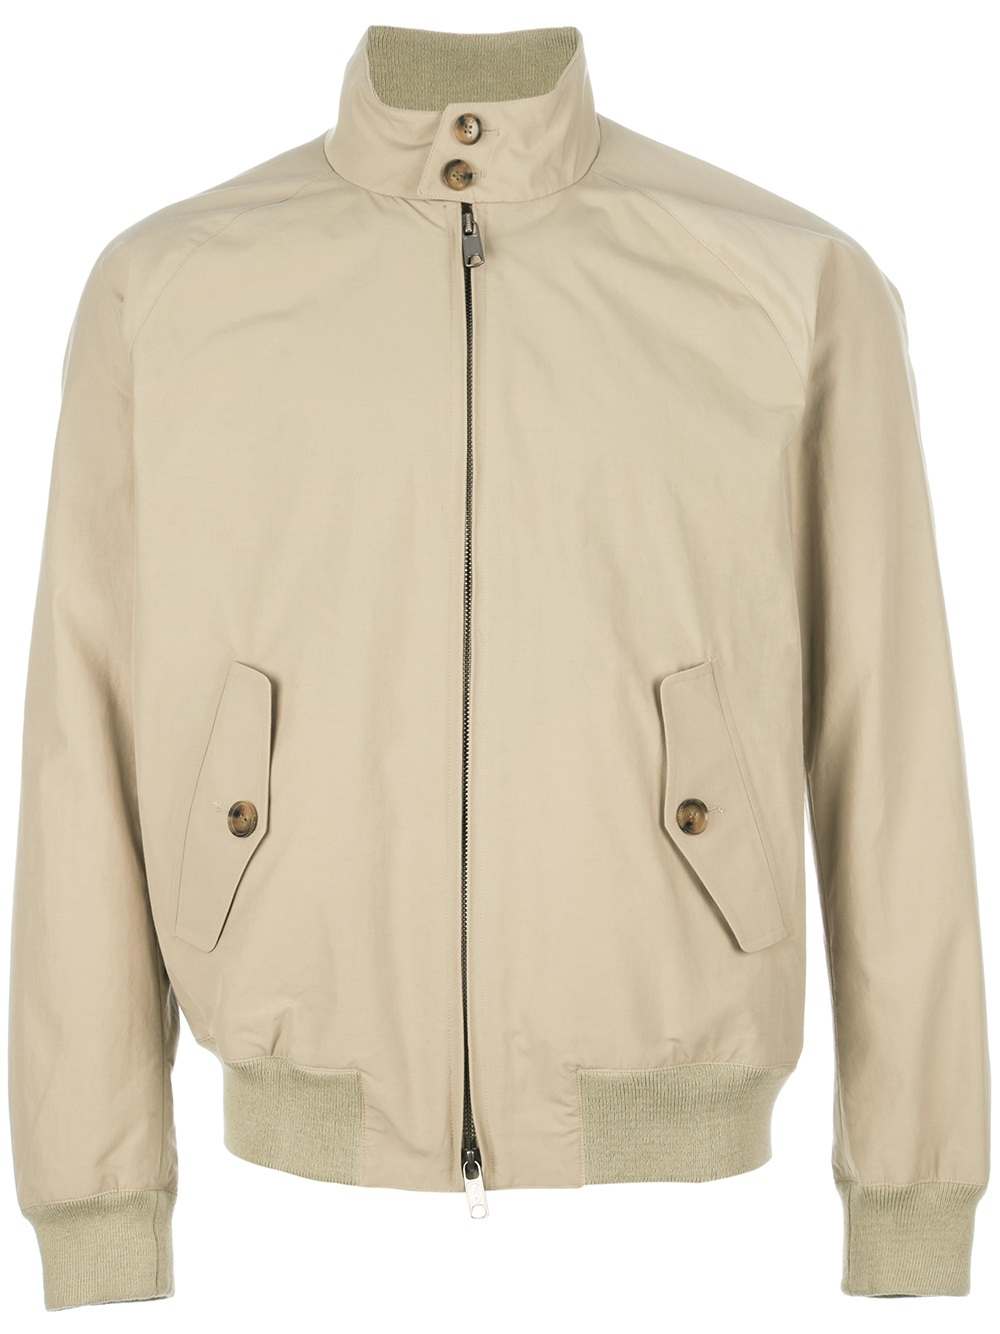 Baracuta 'G9 Harrington' Jacket in Natural for Men - Lyst